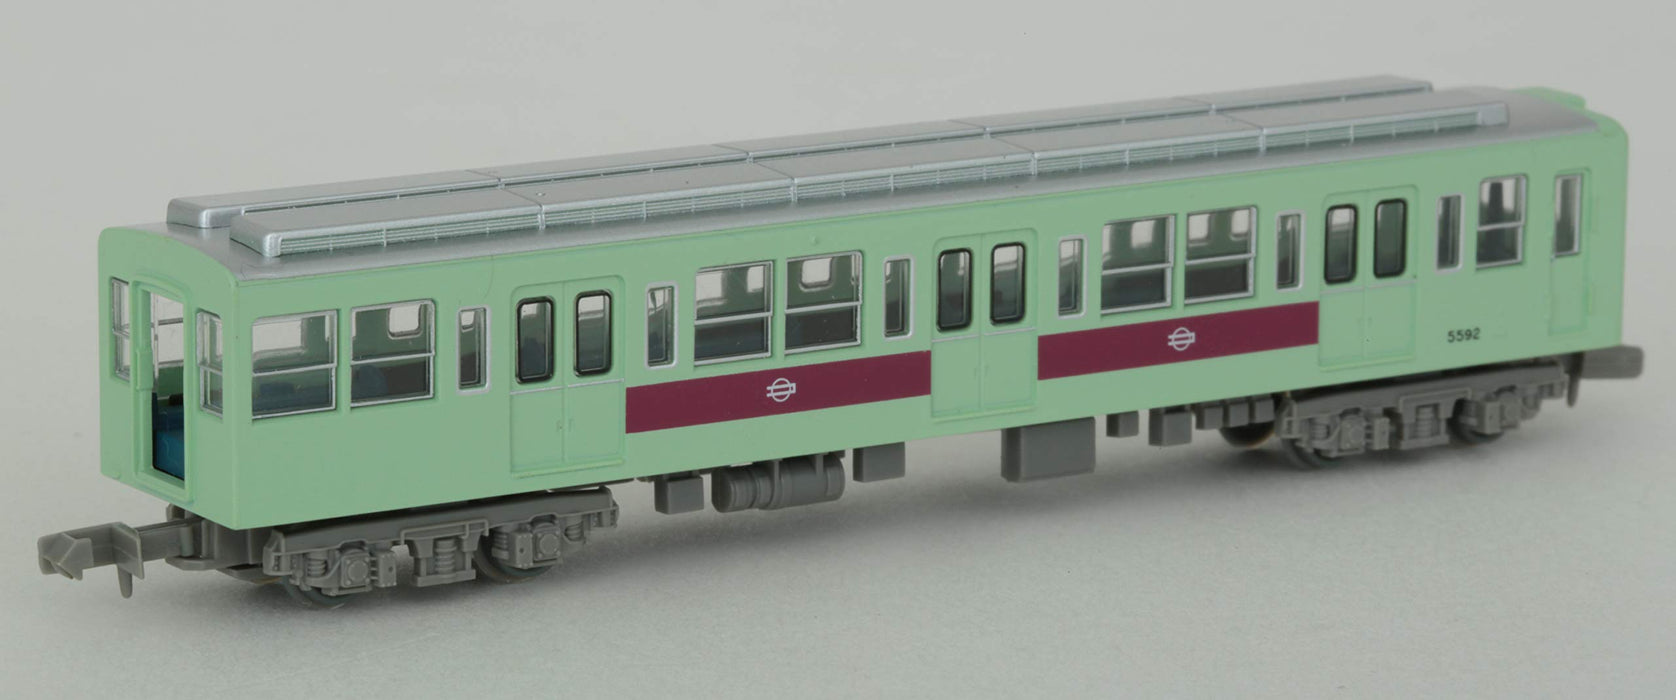 TOMYTEC Osaka Metro Tanimachi Line Series 50 5069 Configuration 6 voitures Set AN Scale